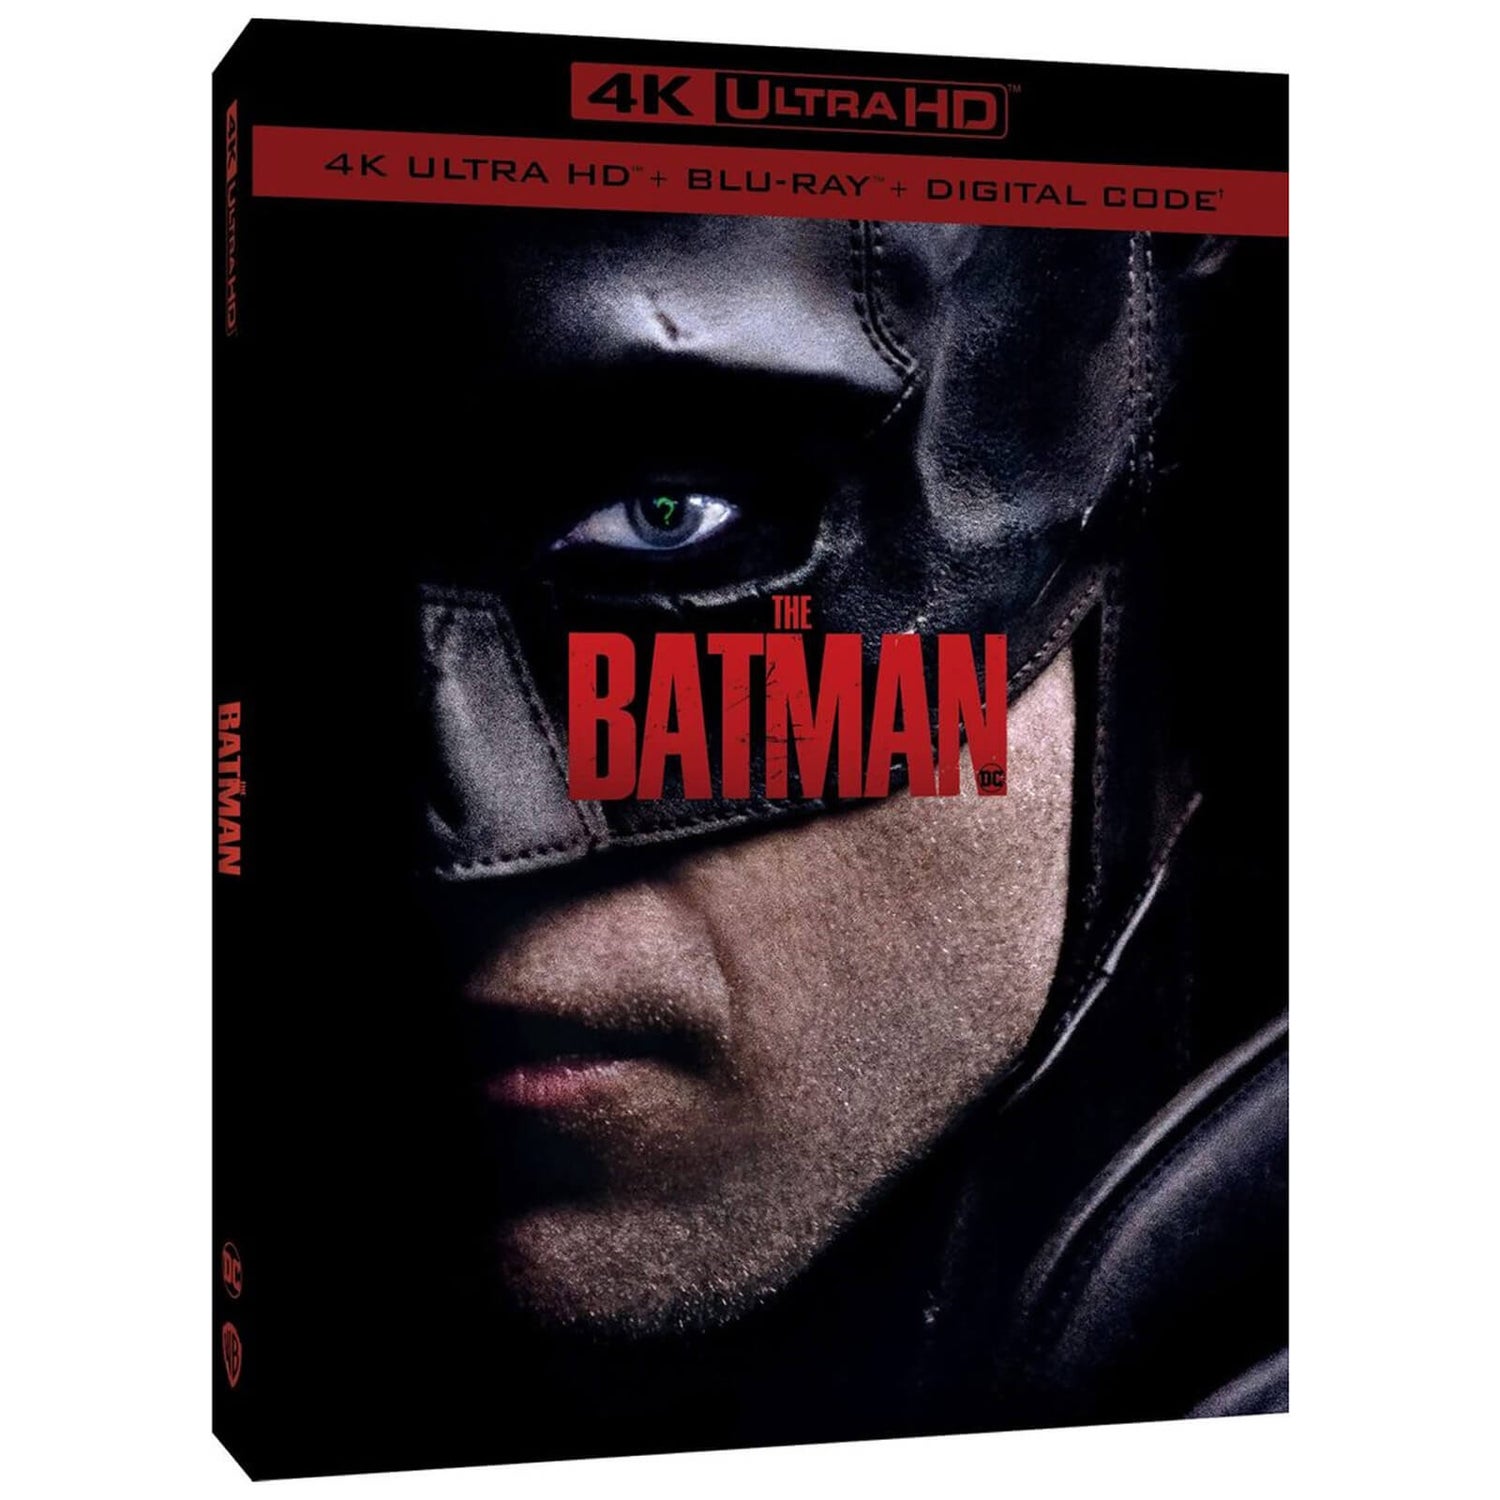 The Batman - 4K Ultra HD (Includes Blu-ray)